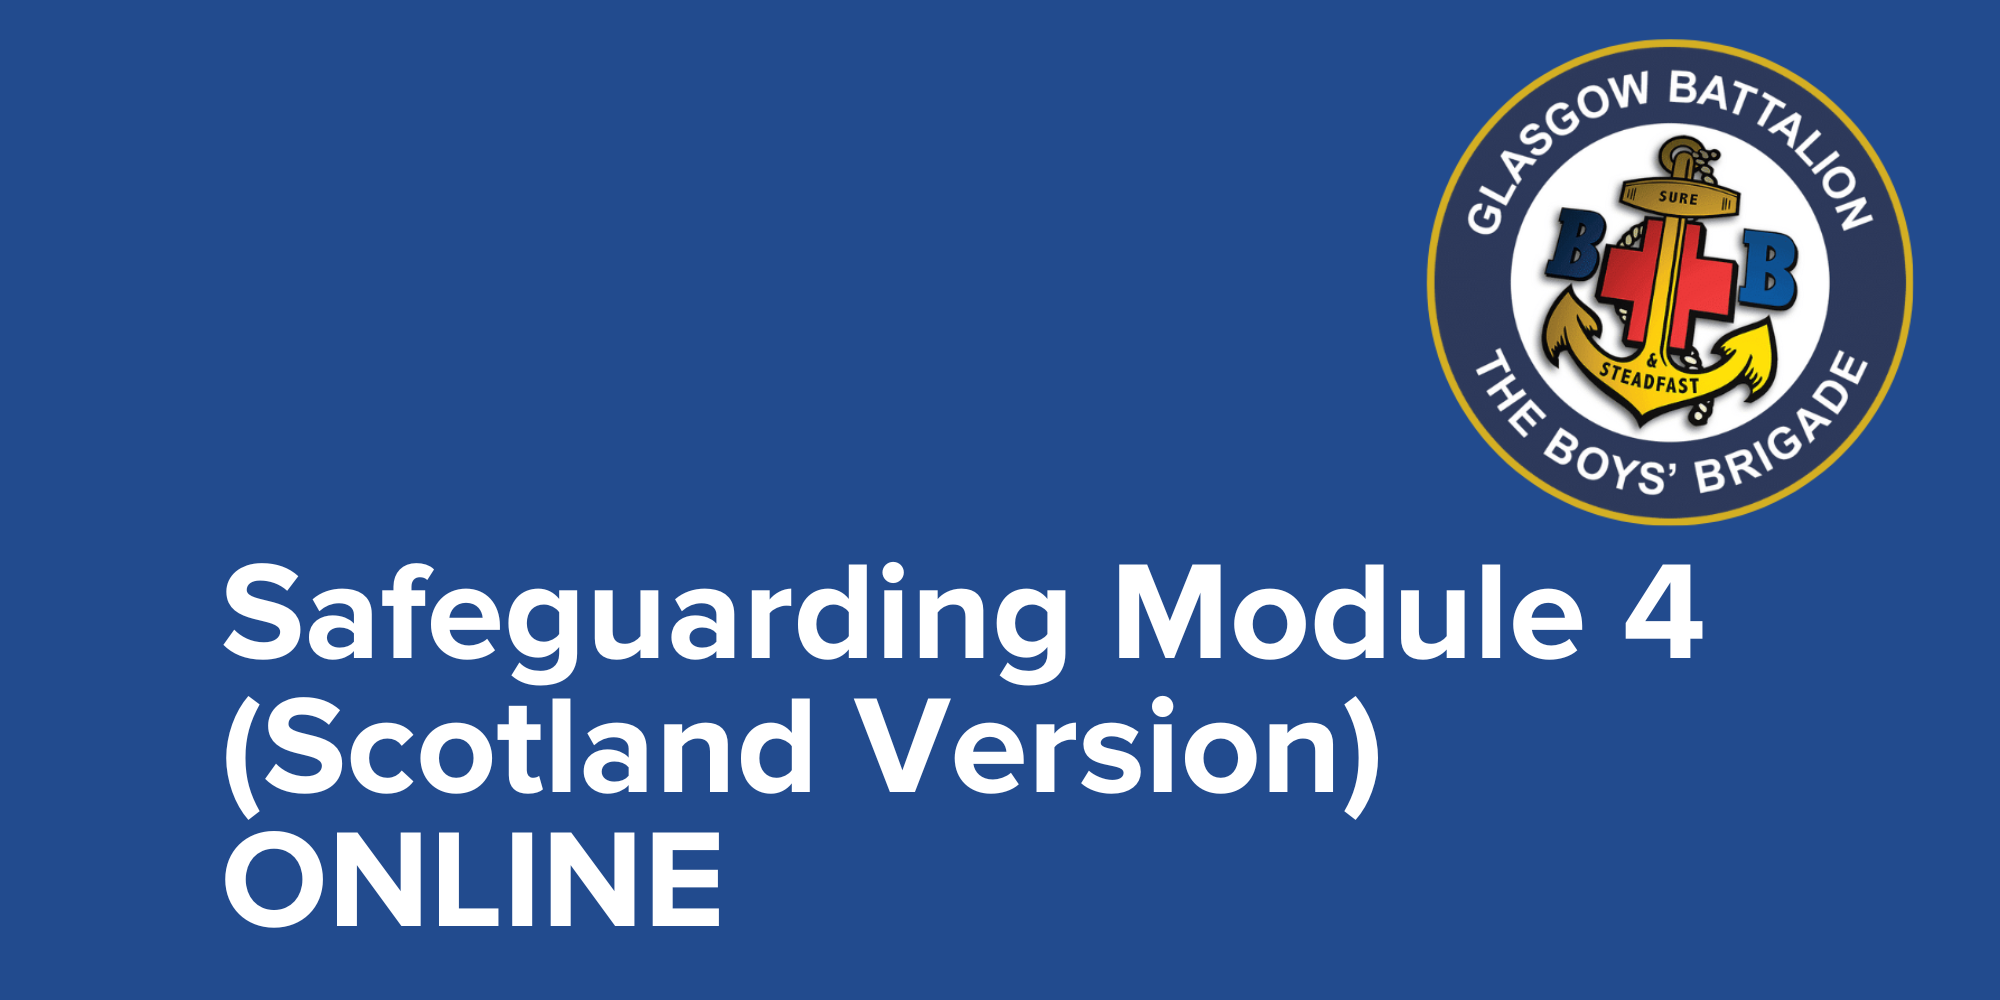 Boys' Brigade UK & RoI- Safeguarding Module 4 (Scotland Version) - Online Course